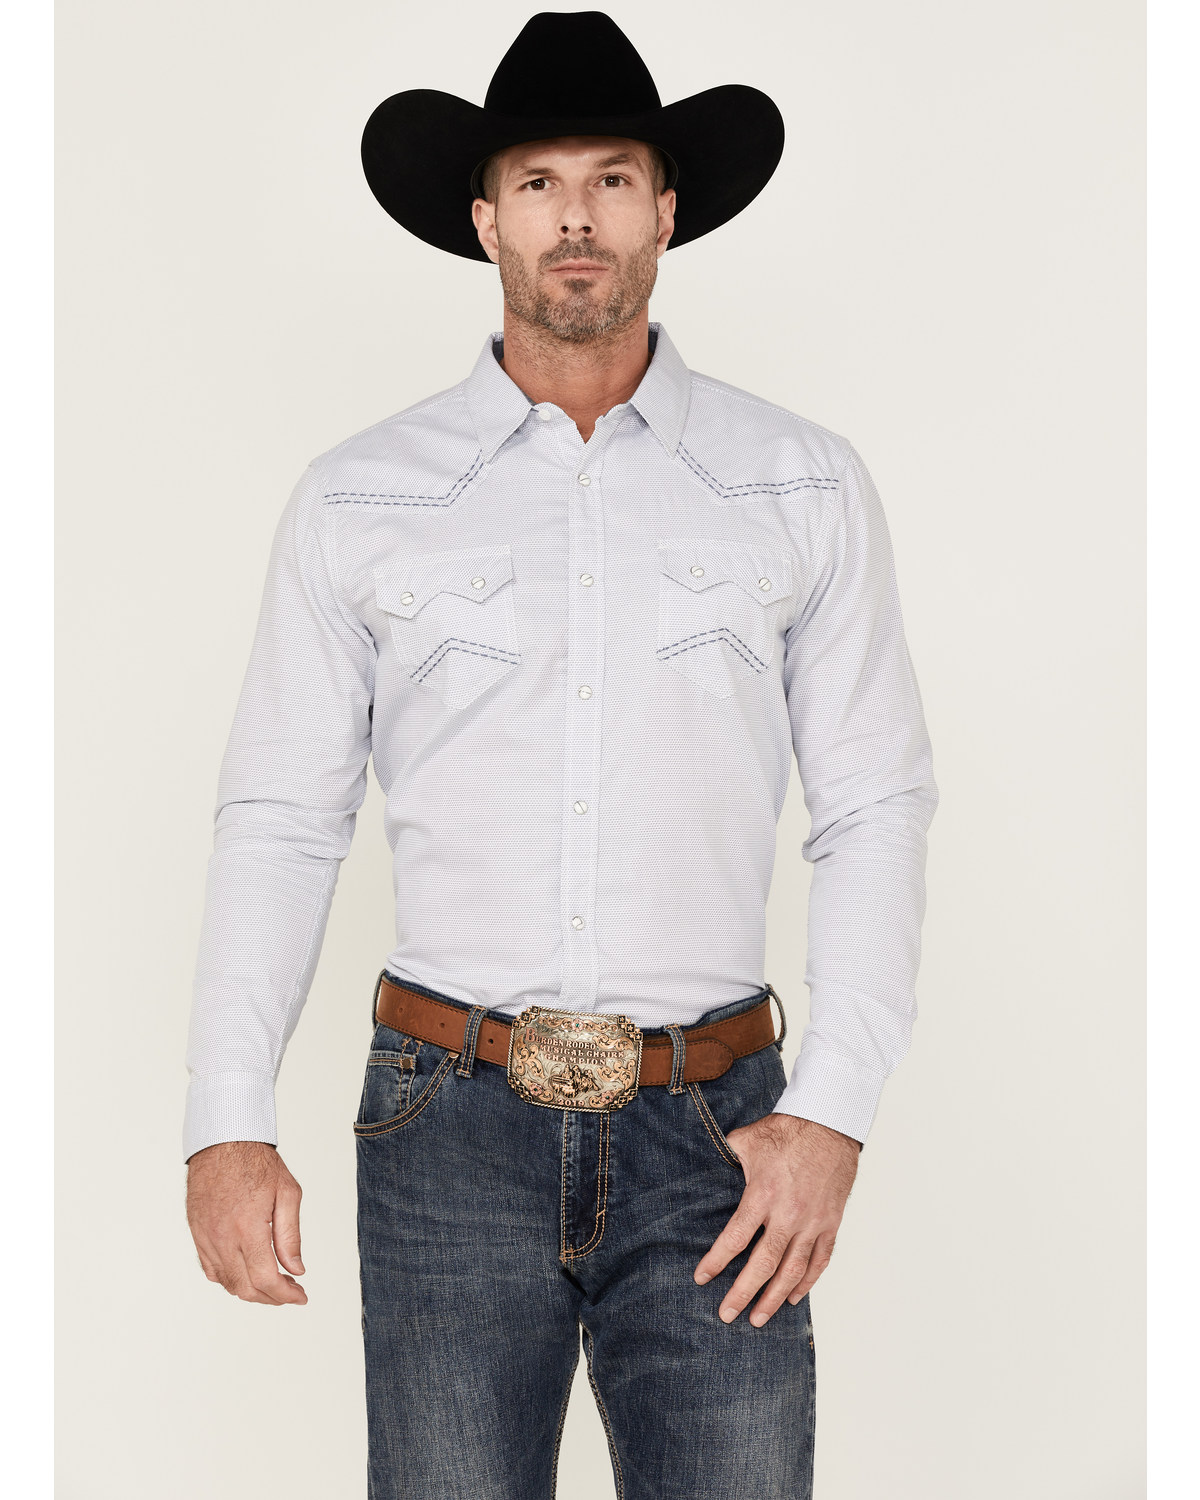 Cody James Men's Sand Creek Tonal Solid Long Sleeve Snap Western Shirt